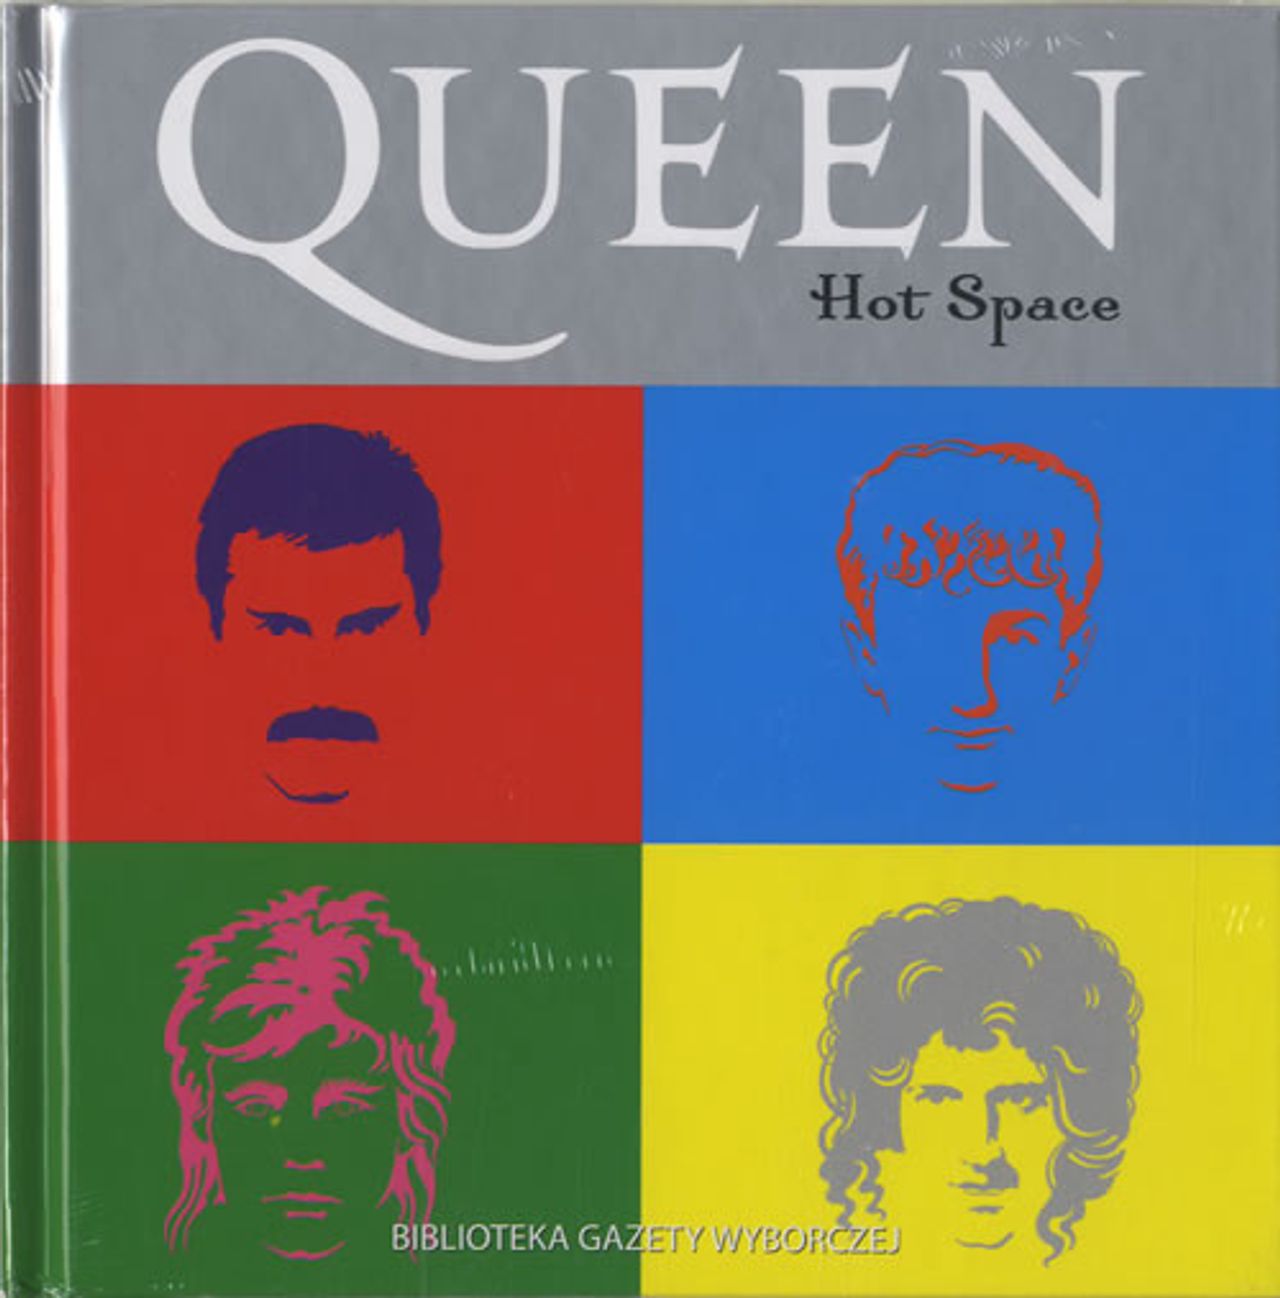 Queen Hot Space Vinilo Lp Remastered